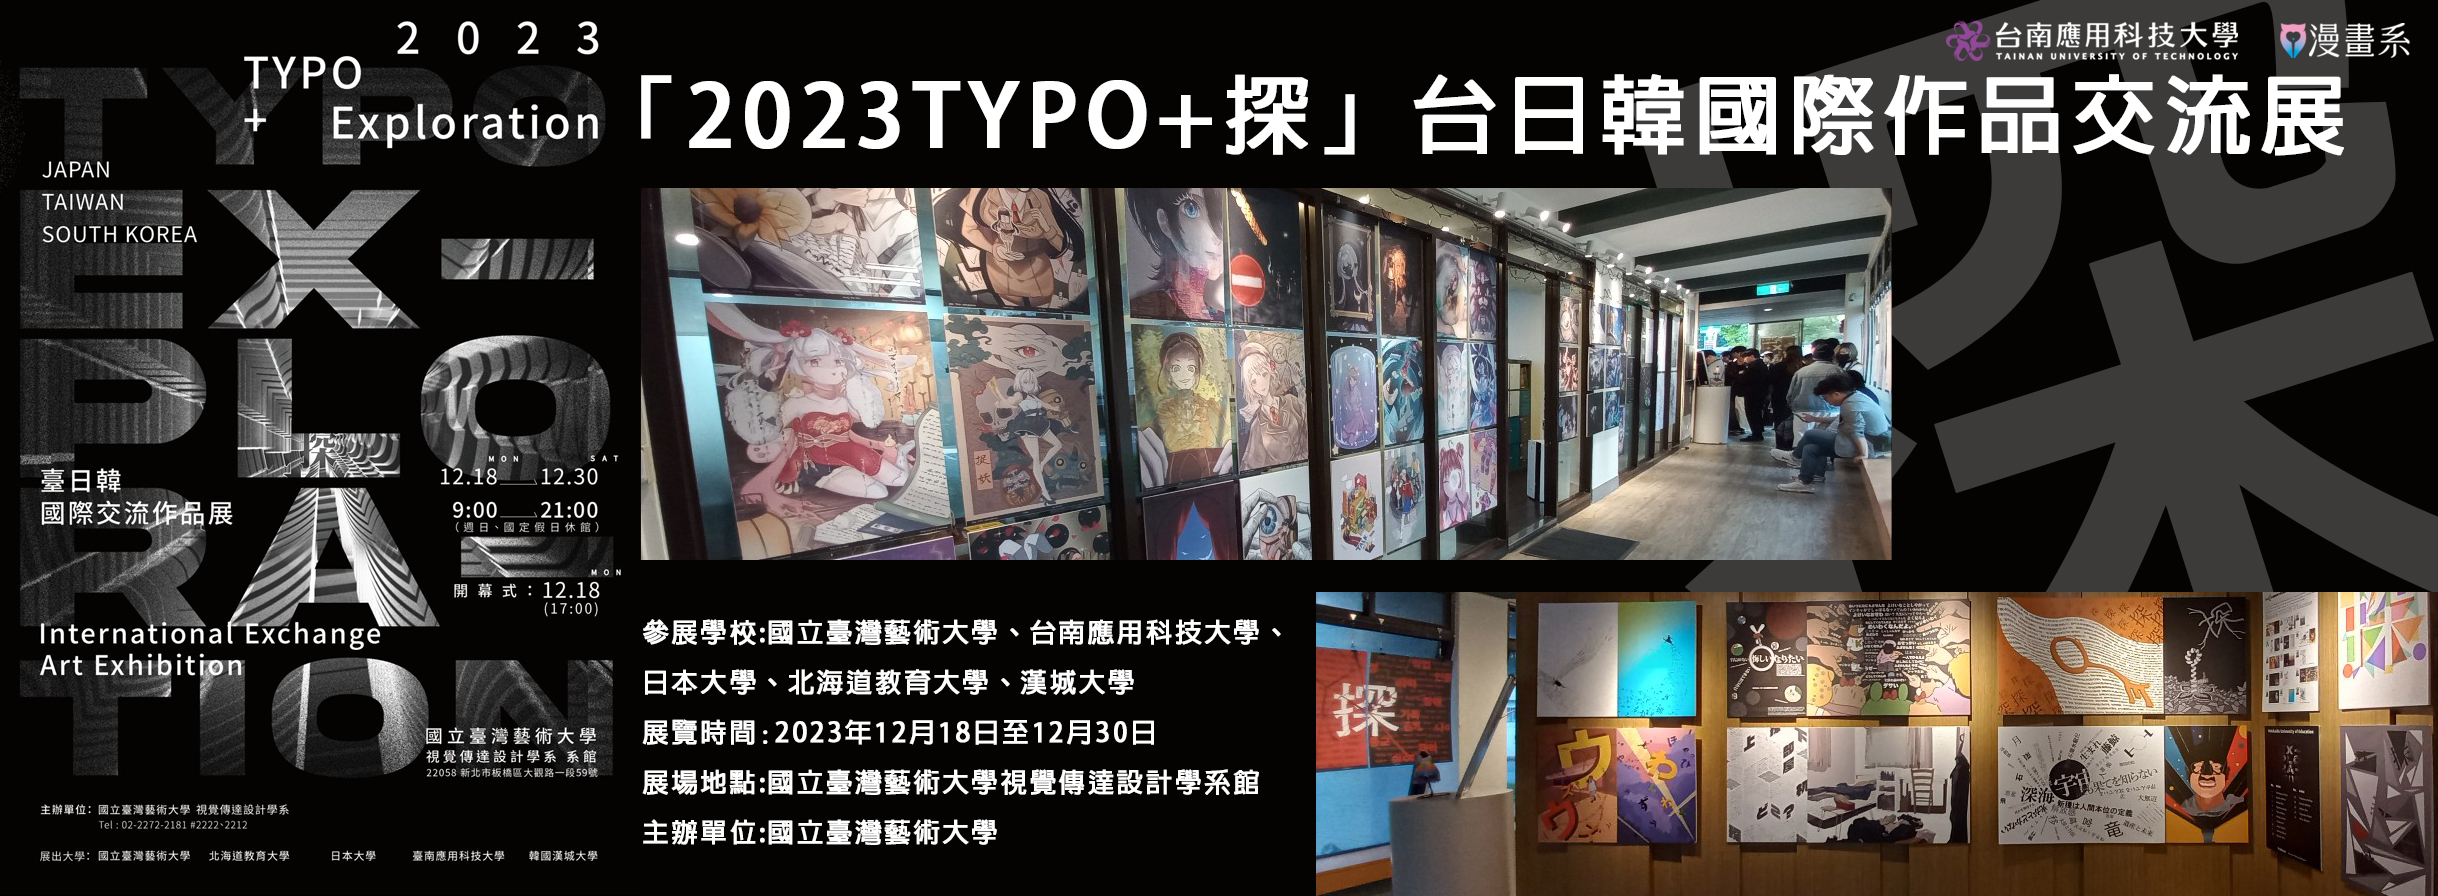 「2023TYPO+探」台日韓國際作品交流展